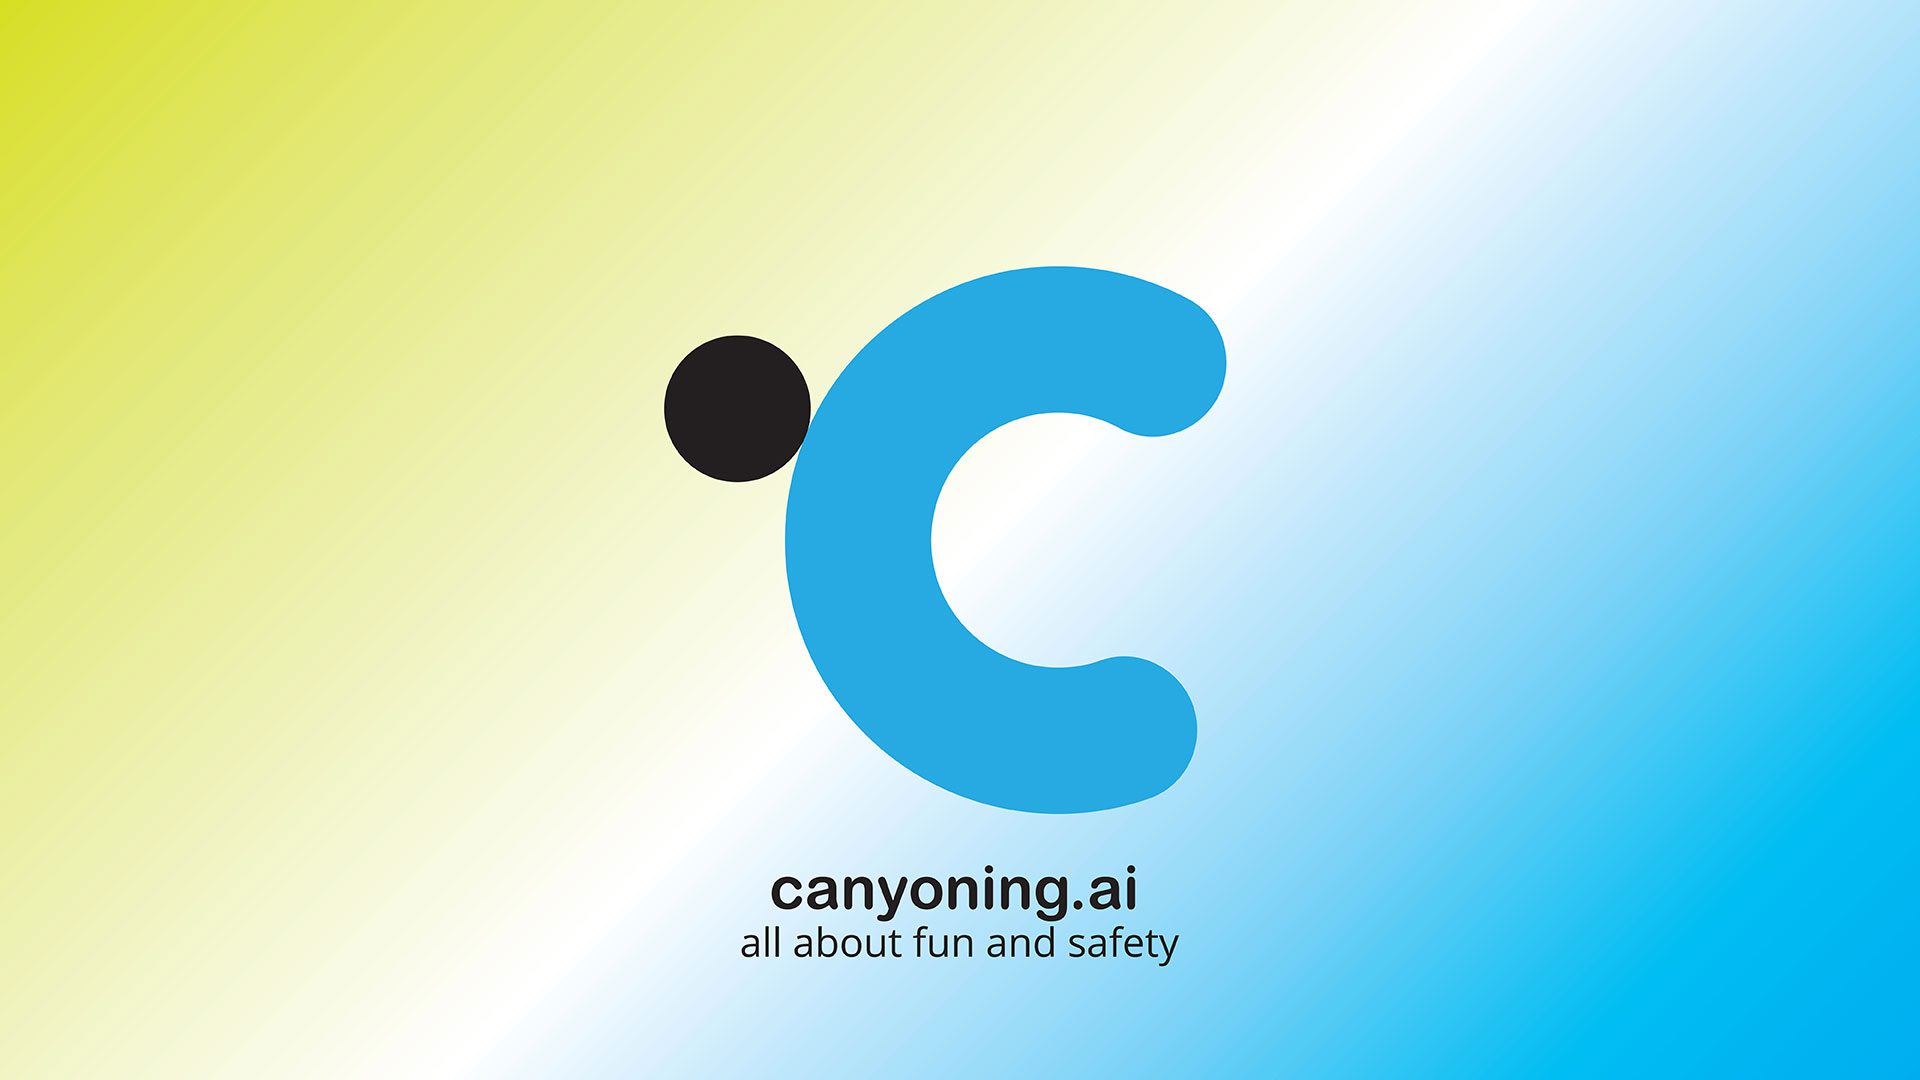 The creation of canyoning.ai logo